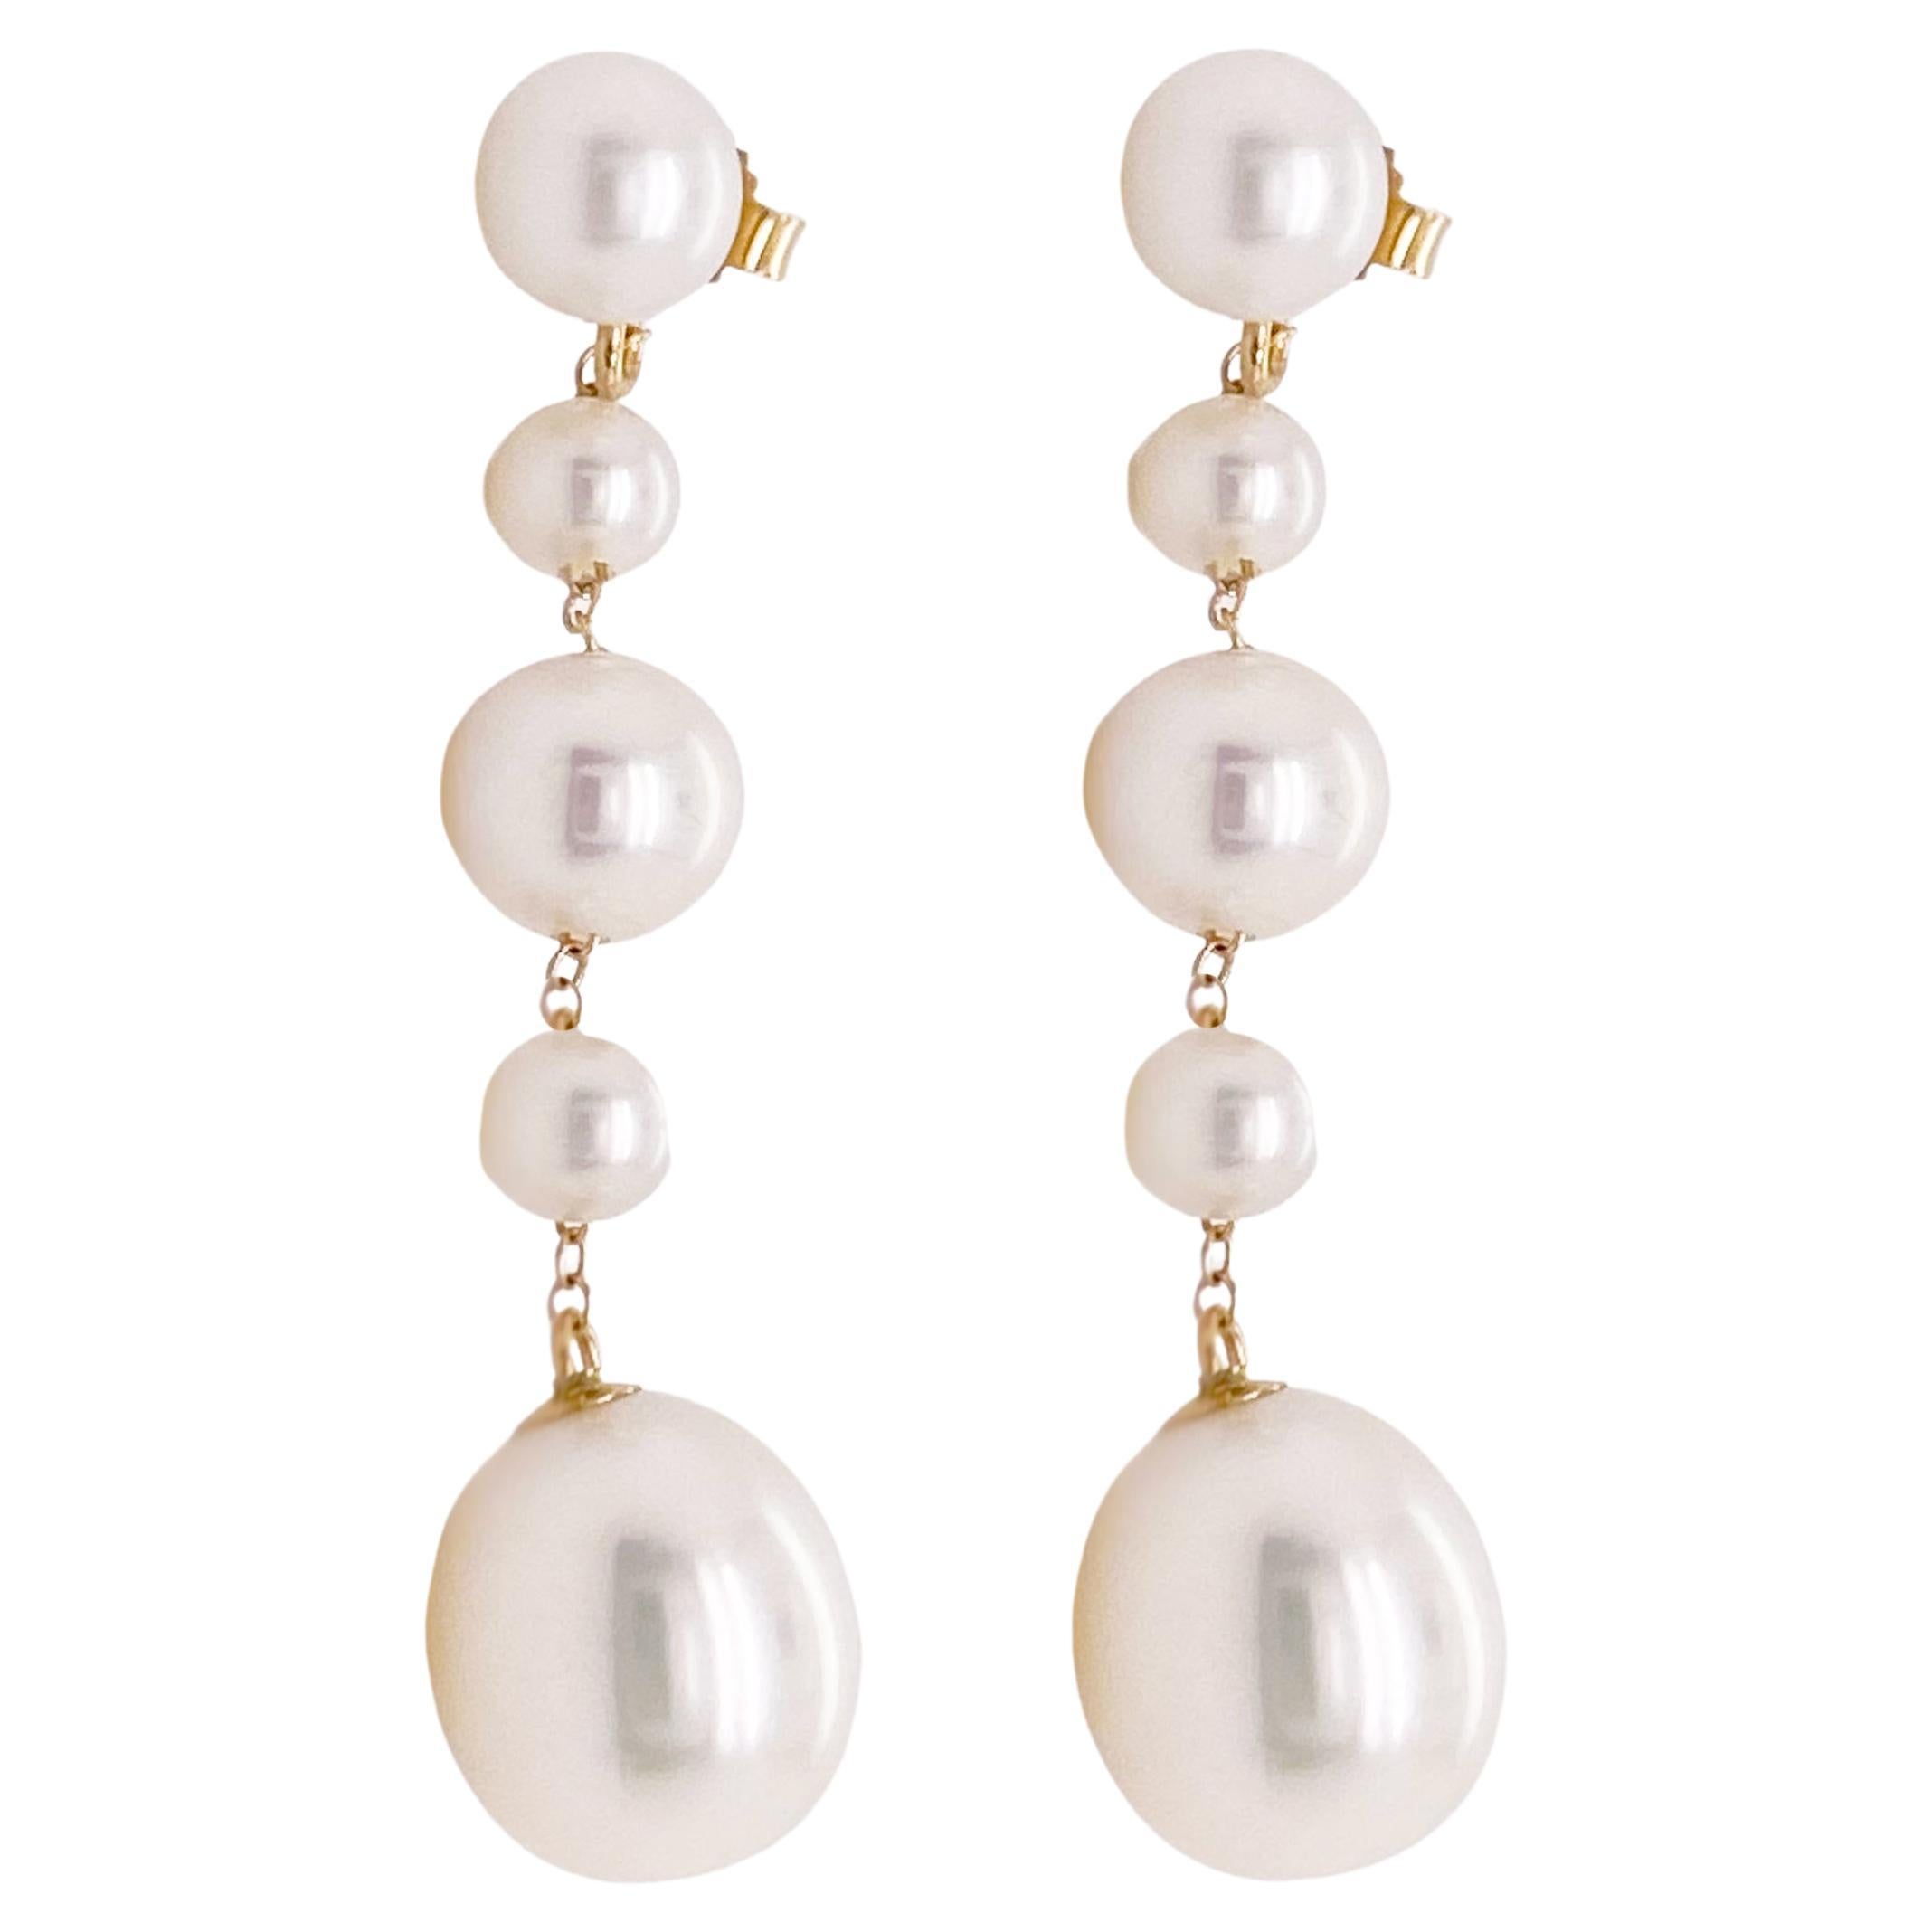 Wedding Pearl Earrings, 5 Pearls w 14 K Gold Between, Wedding Statement Earrings For Sale